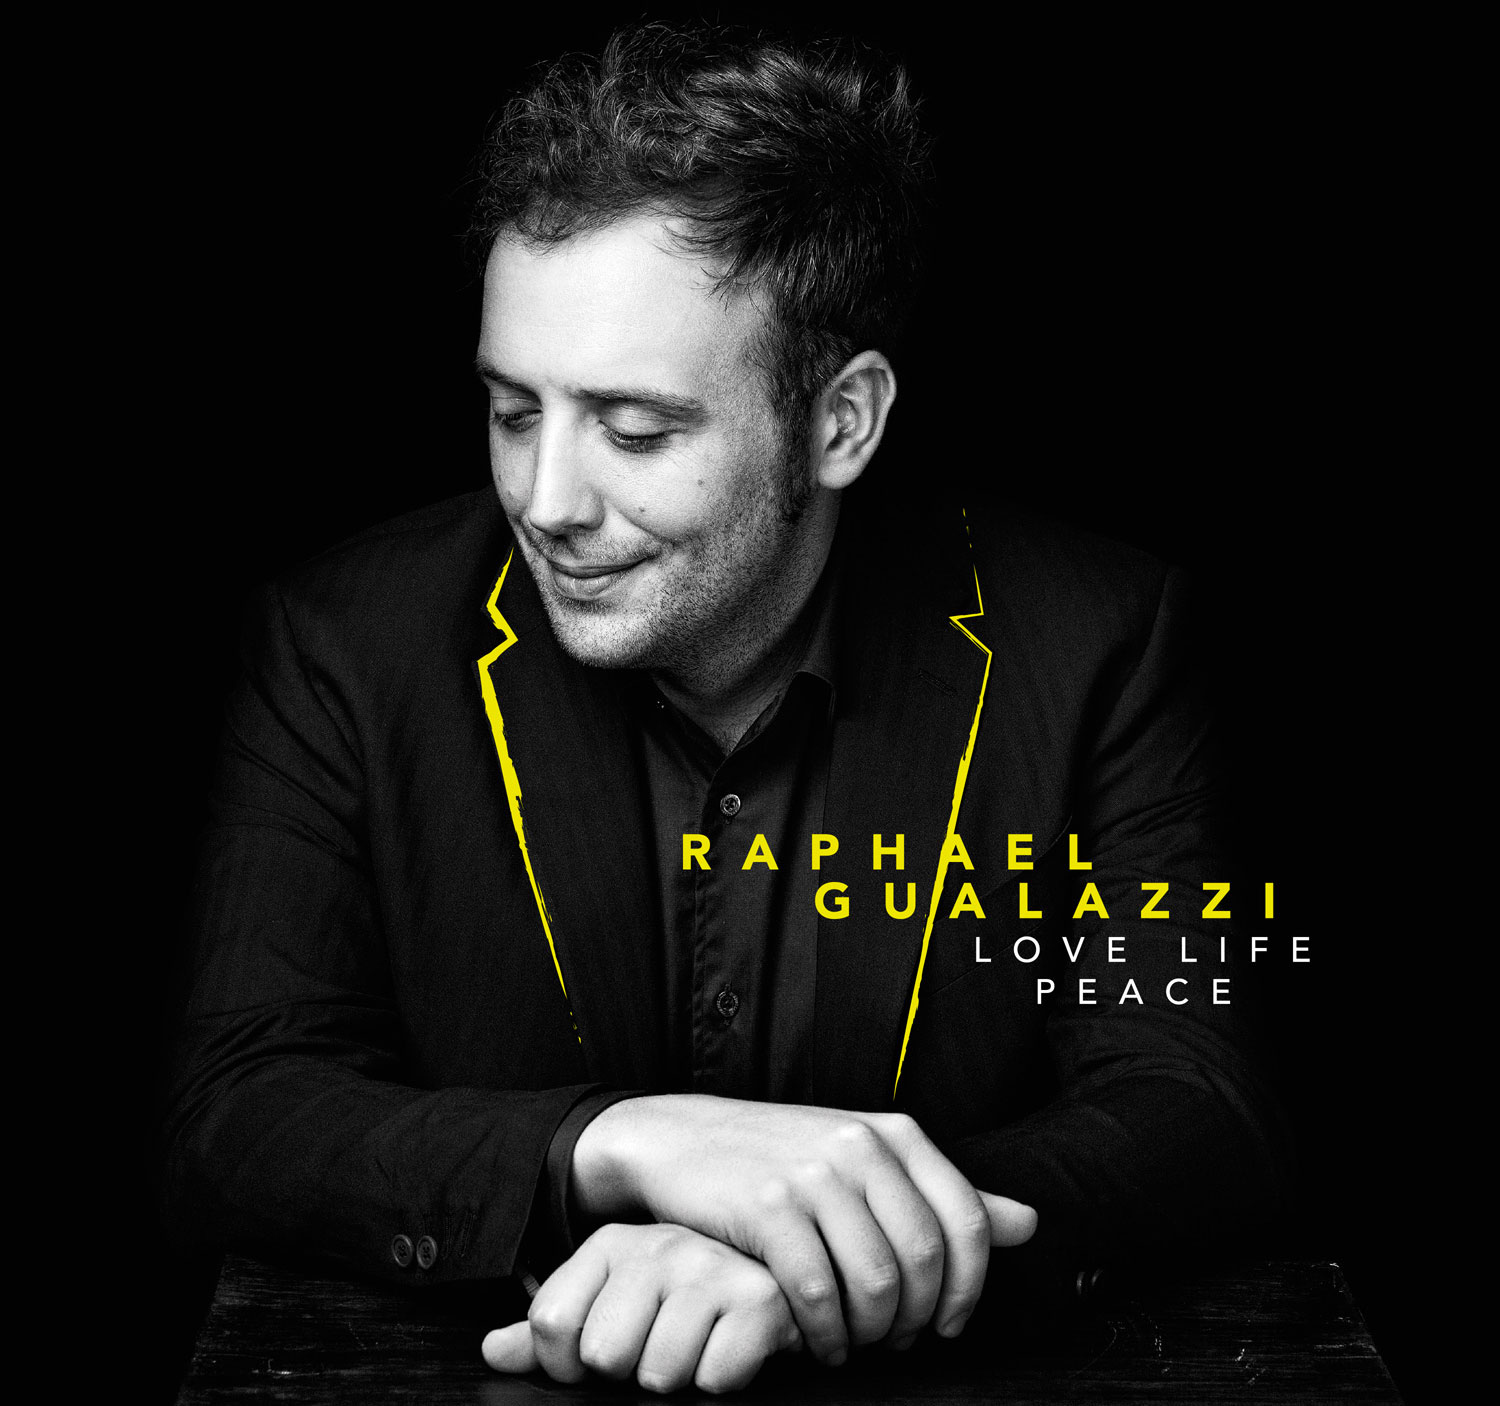 Raphael Gualazzi